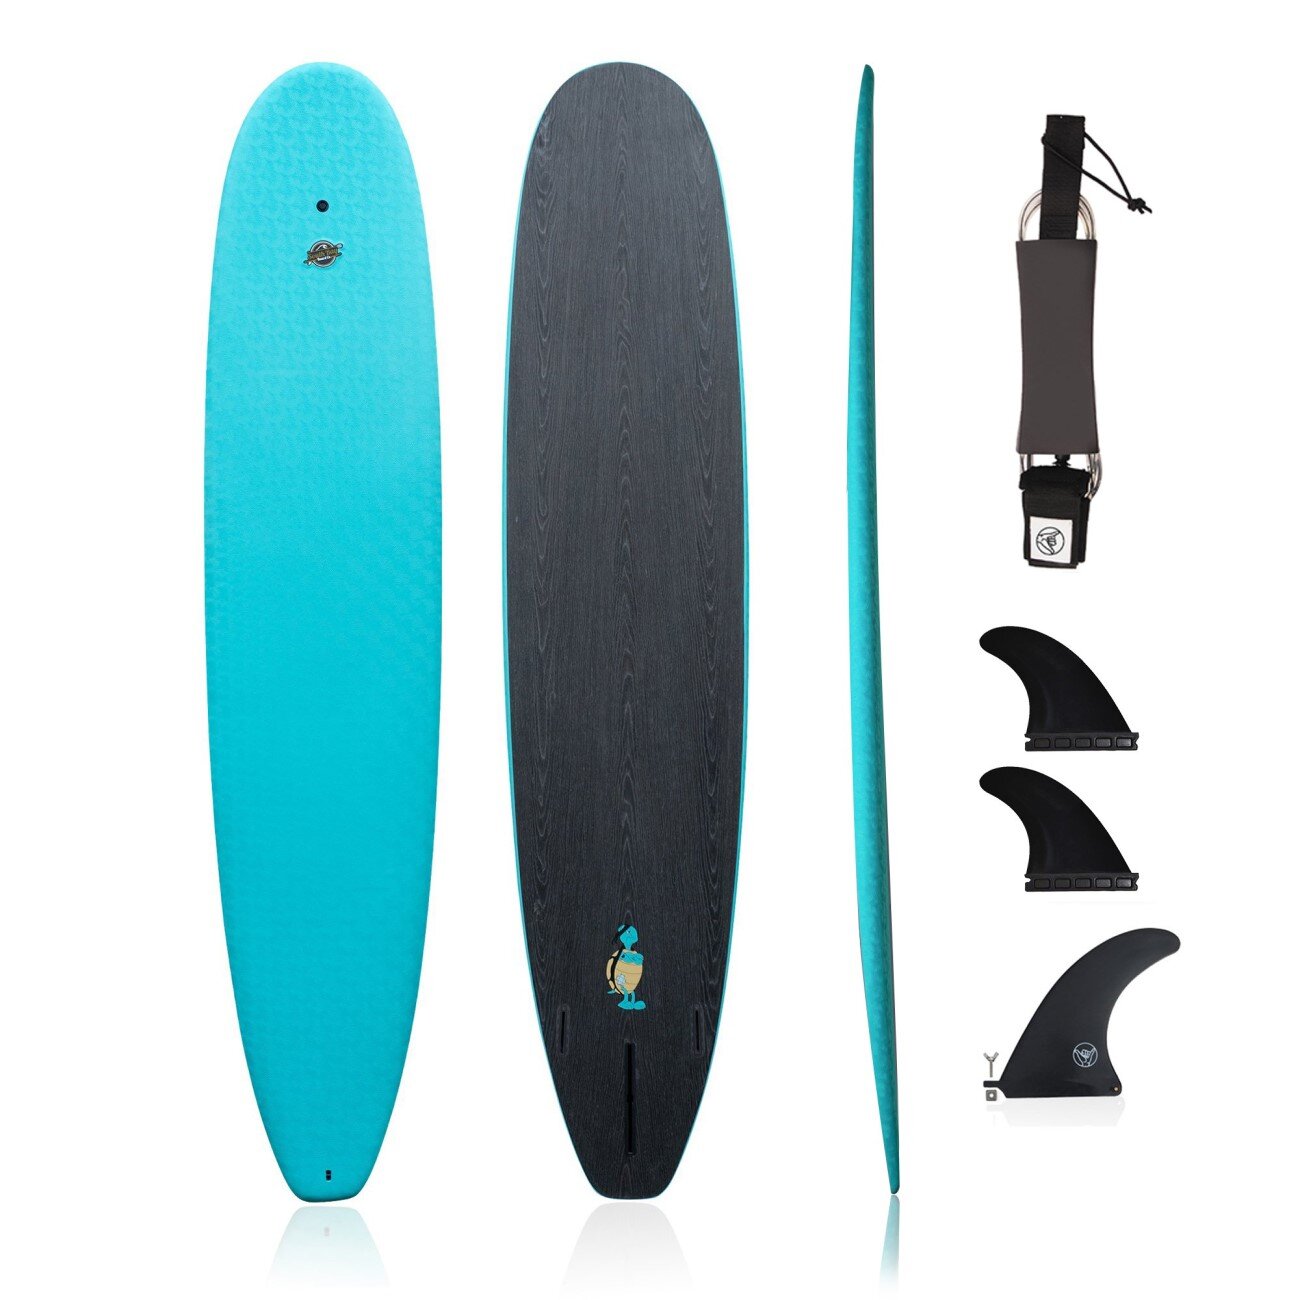 8 Verve Surfboard Beginner Soft Top Surfboard by Gold Coast Surfboards 